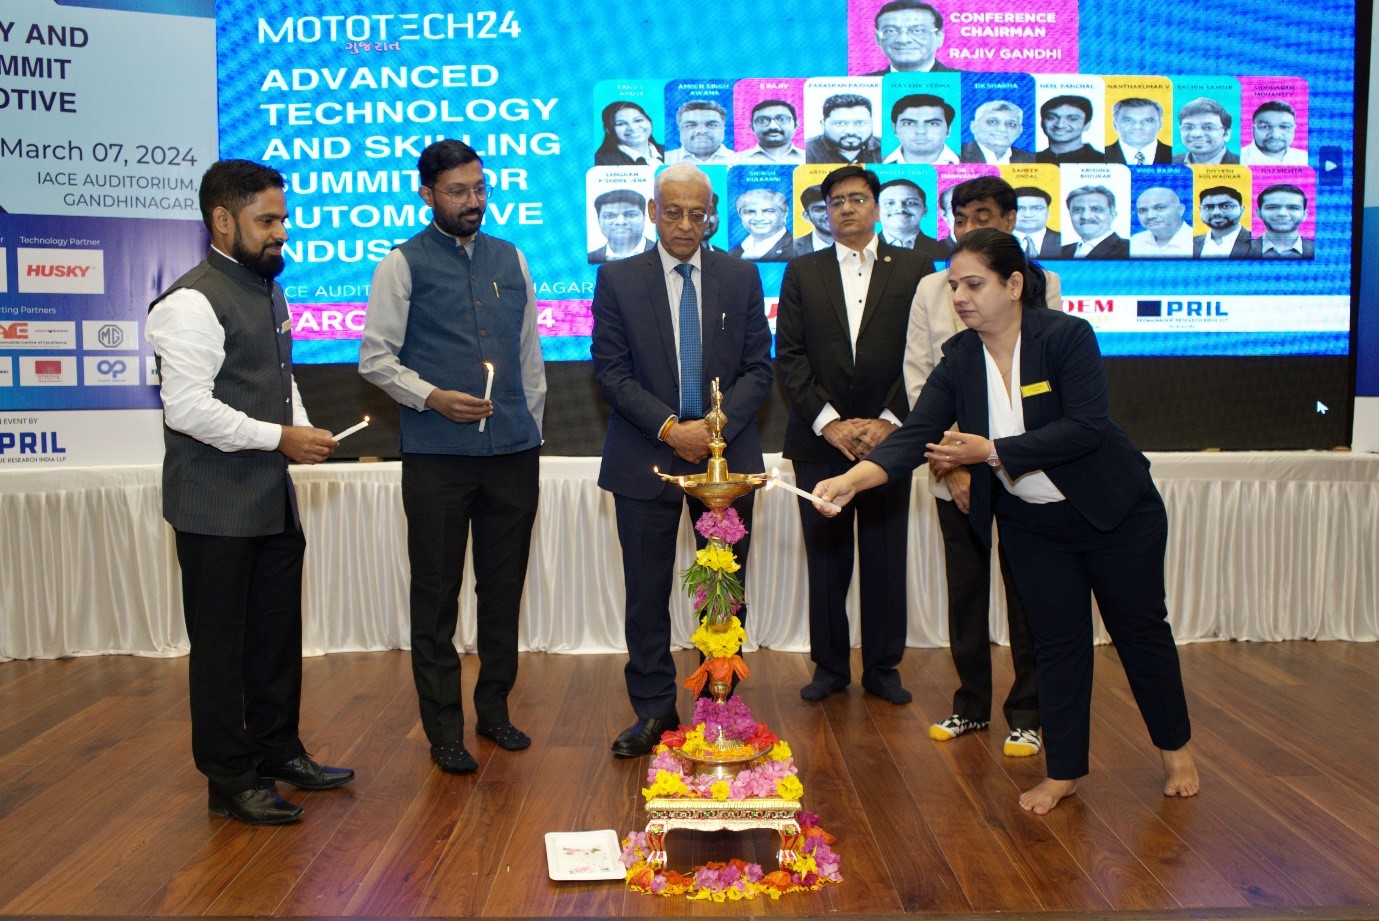 MOTOTECH24 Gujarat summit calls to accelerate automotive technology and Skilling